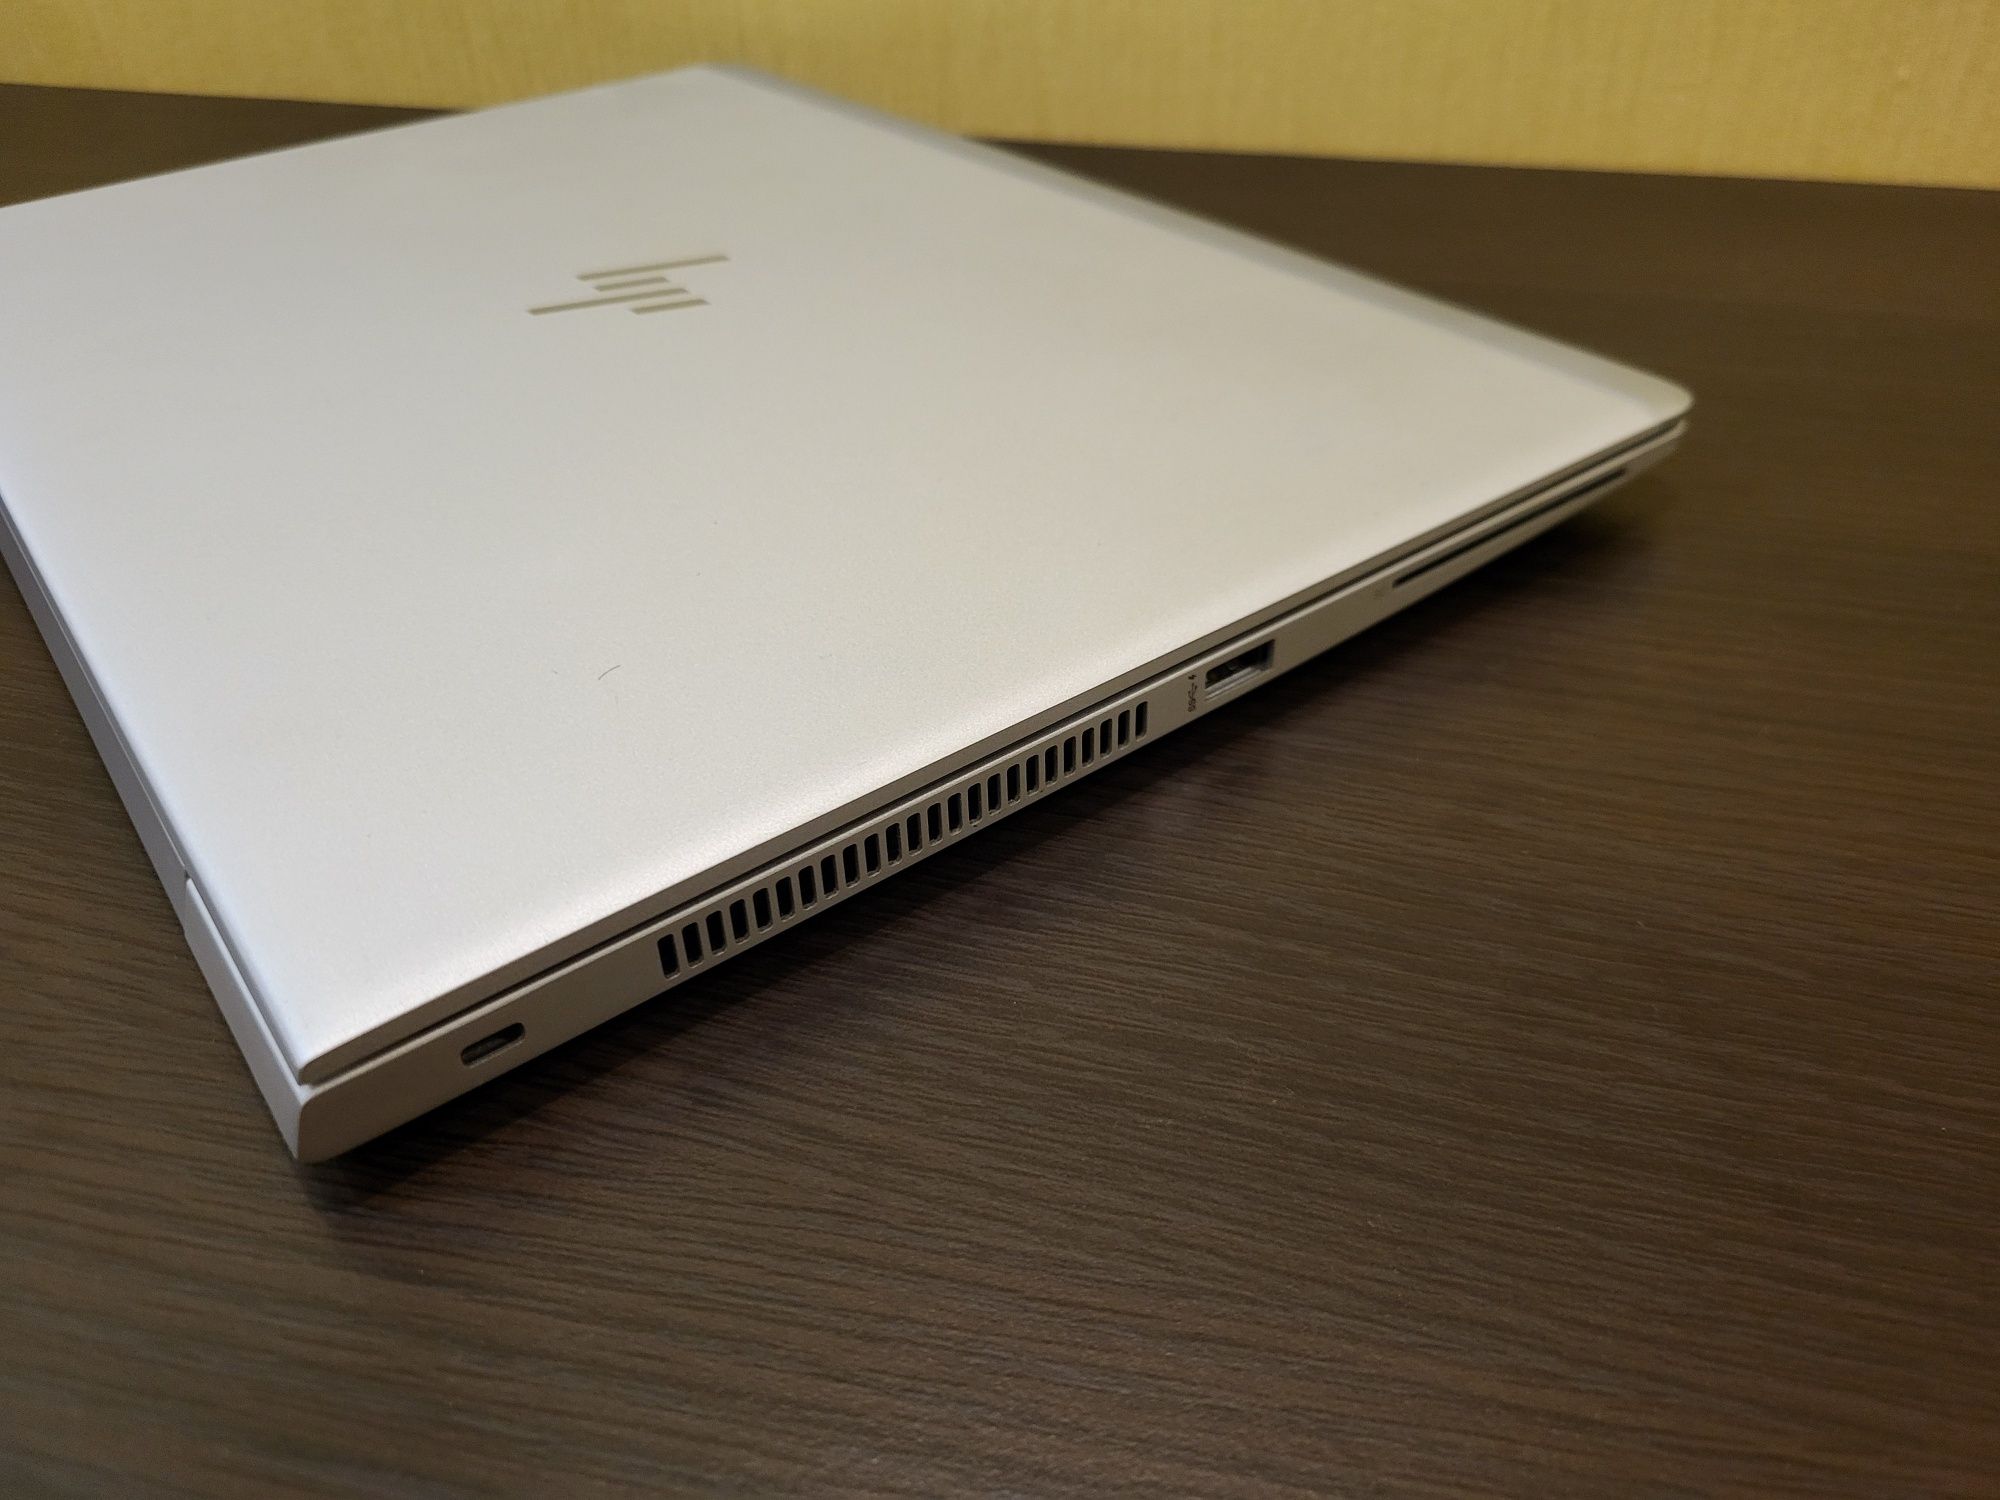 Ноутбук HP EliteBook 840 G5 Intel Core i5-8250U 1.6GHz 8GB/256GB SSD